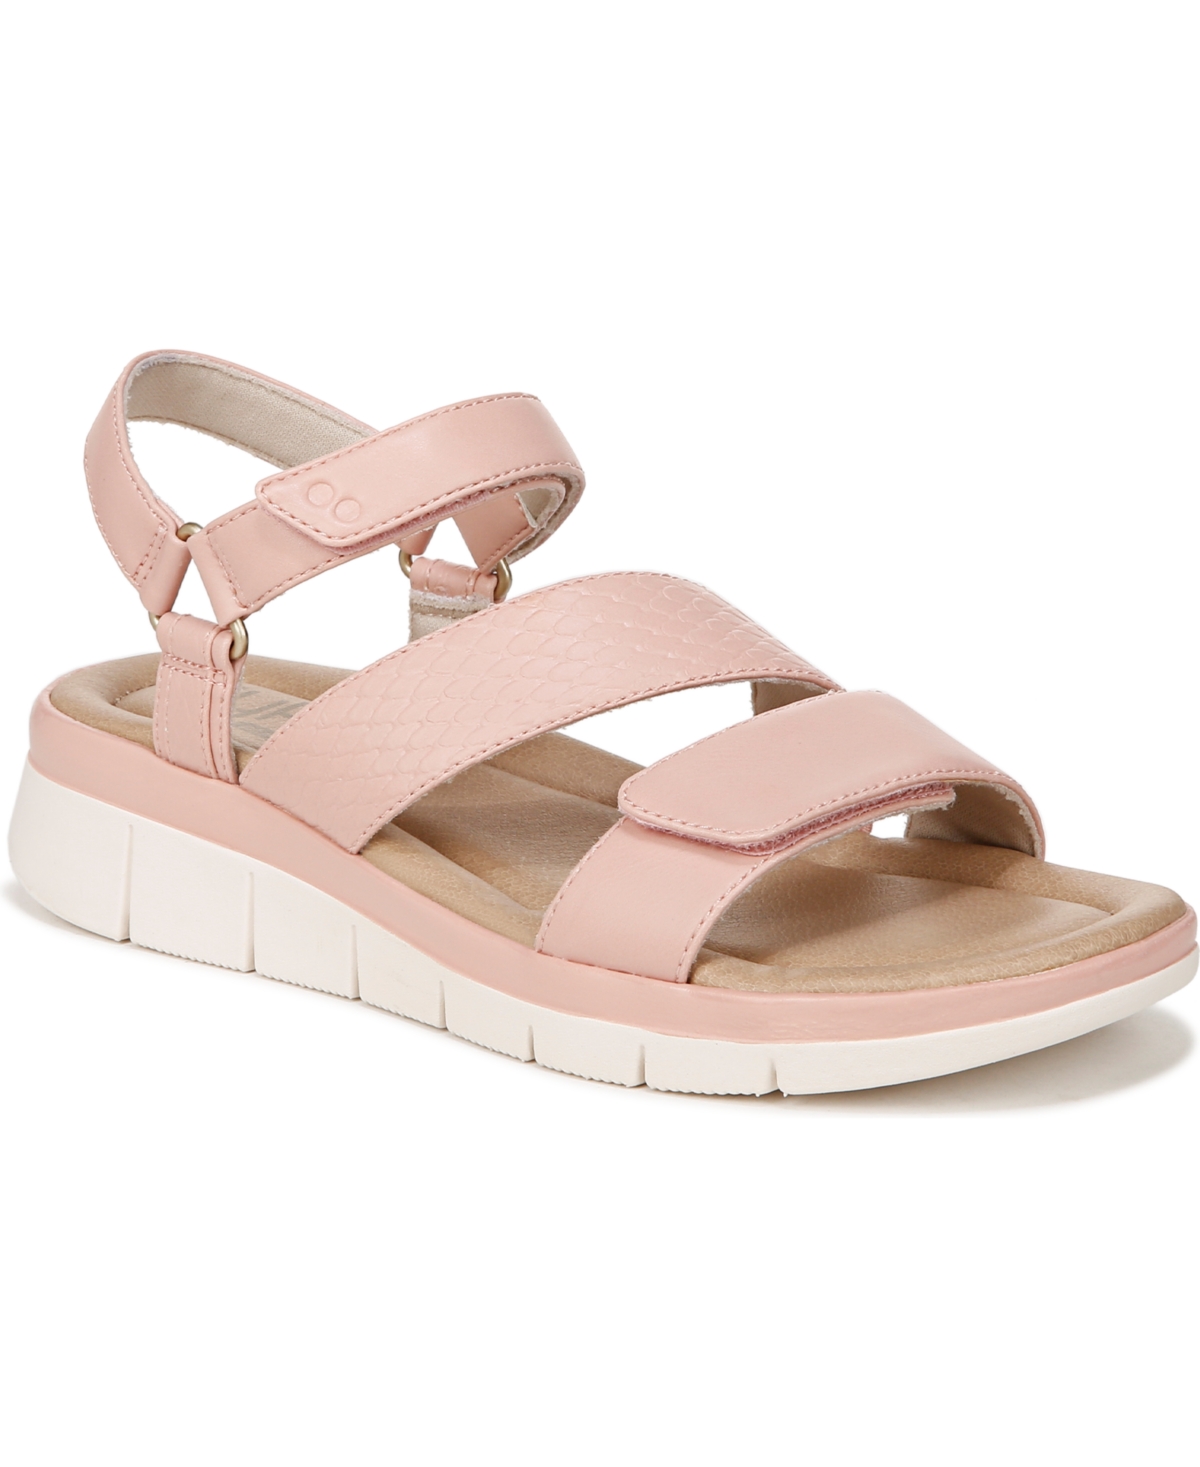 Women's Elite Slingback Sandals - Pink Faux Leather